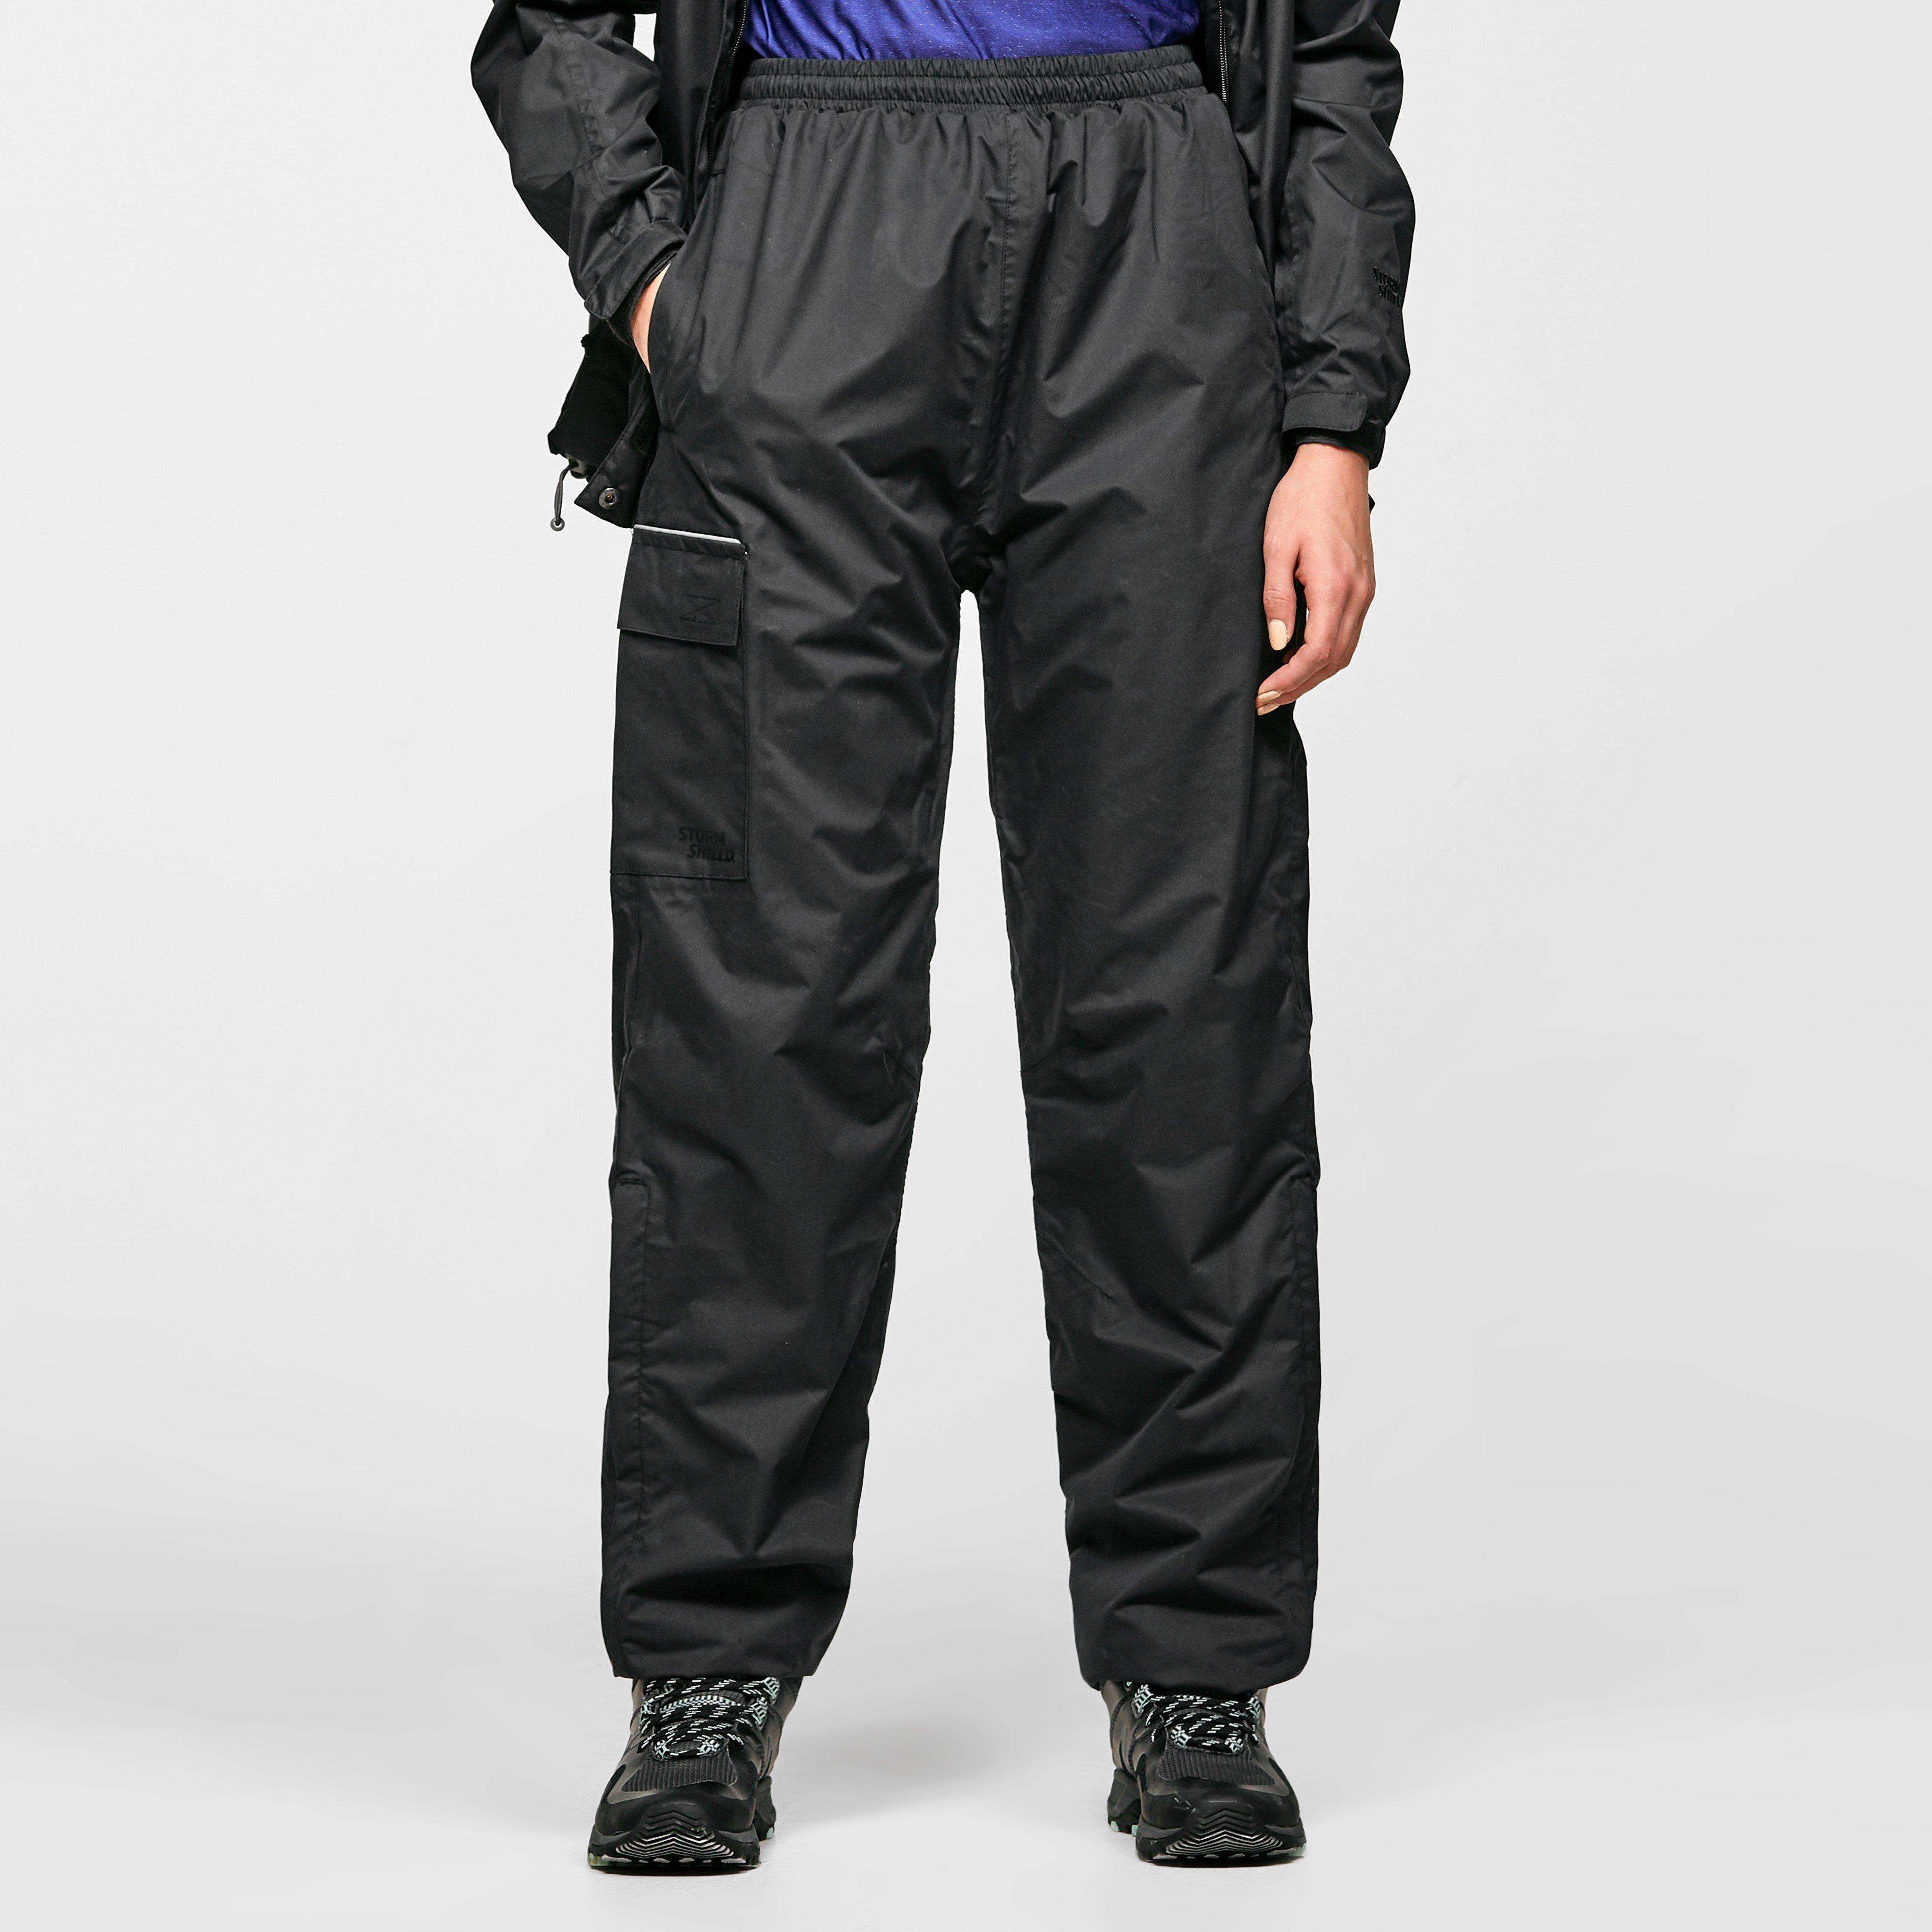 Peter Storm Womens Storm Waterproof Trousers - Black/blk  Black/blk